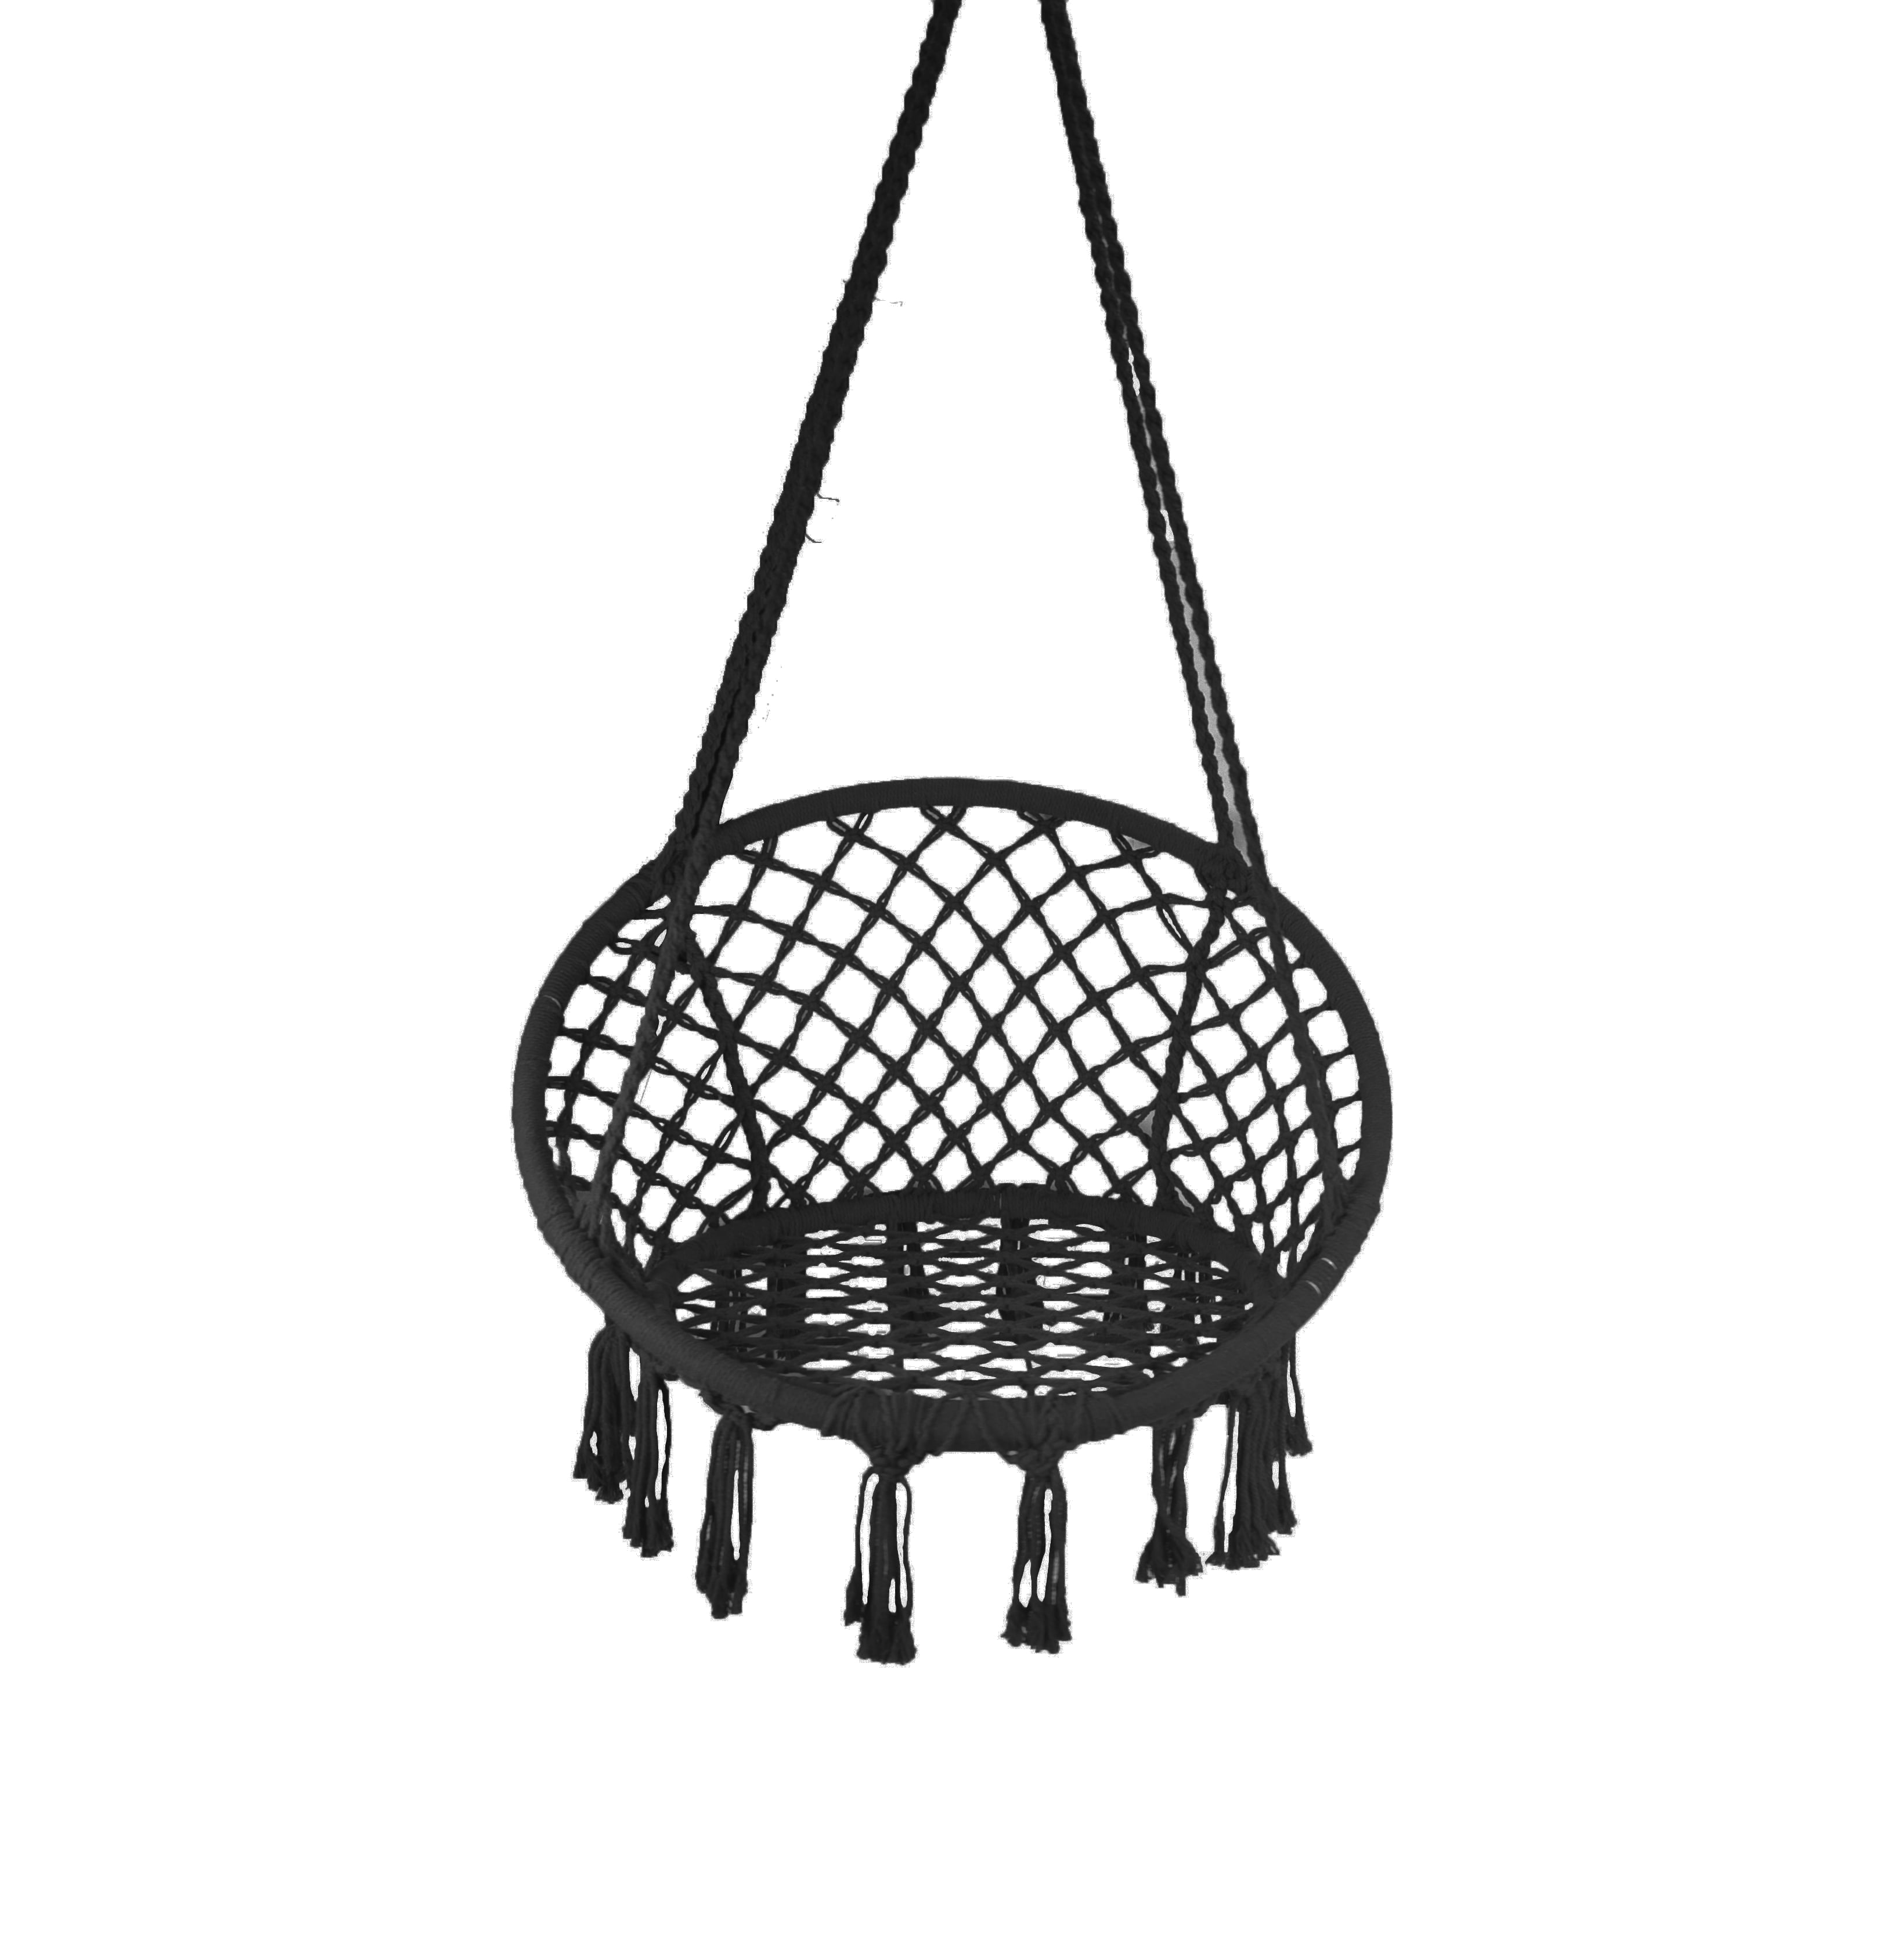 Equip Macrame Outdoor Hammock Chair, Cotton Blend Black, Size 47 